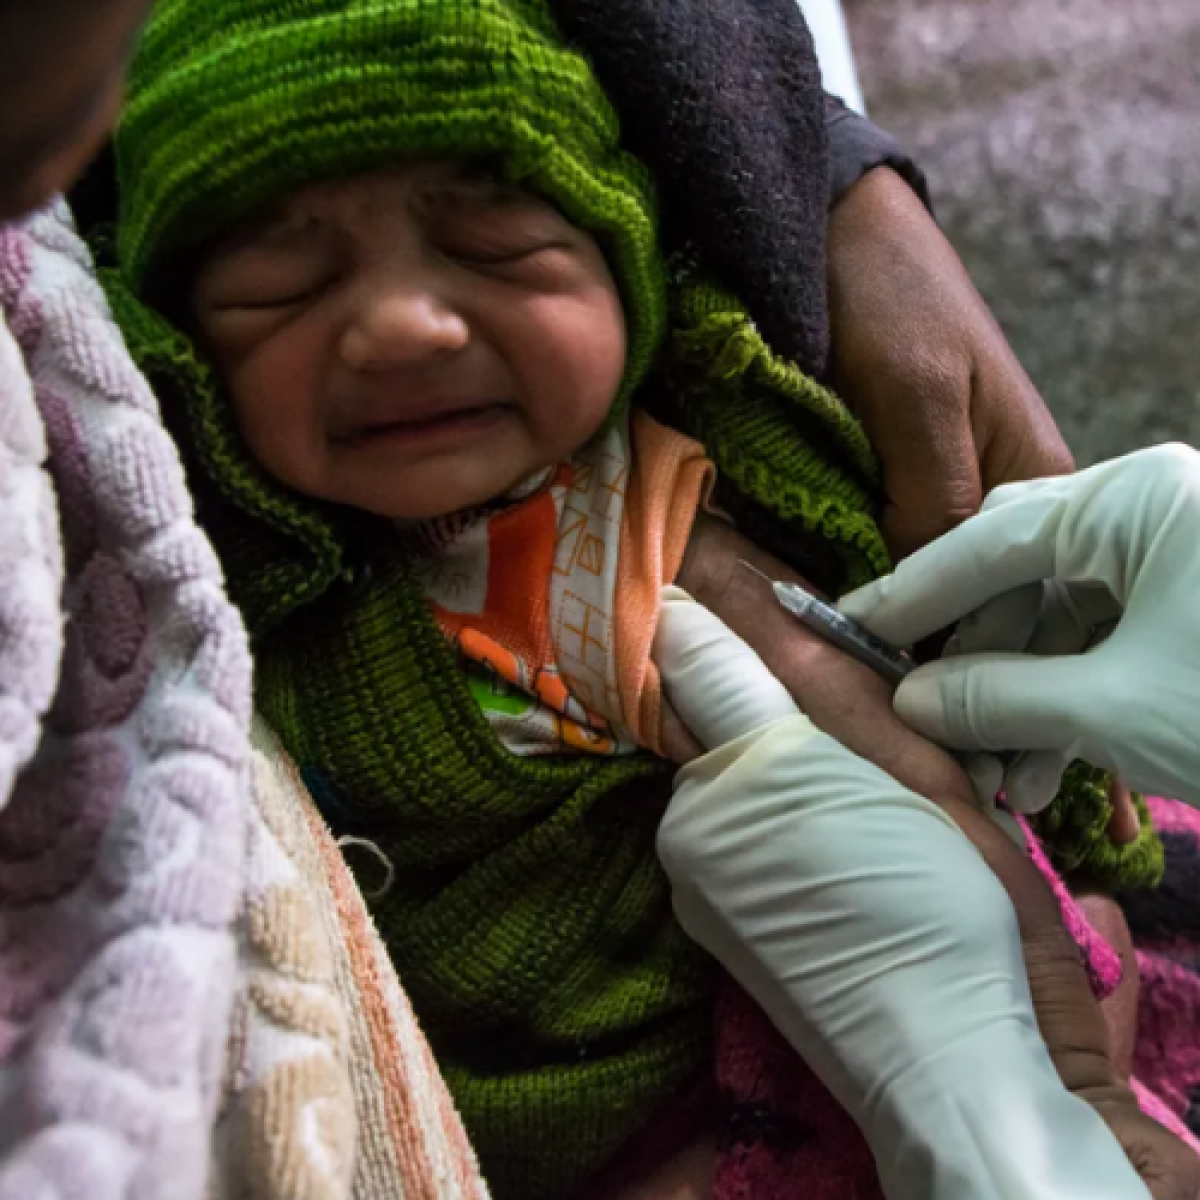 Infant receiving immunization